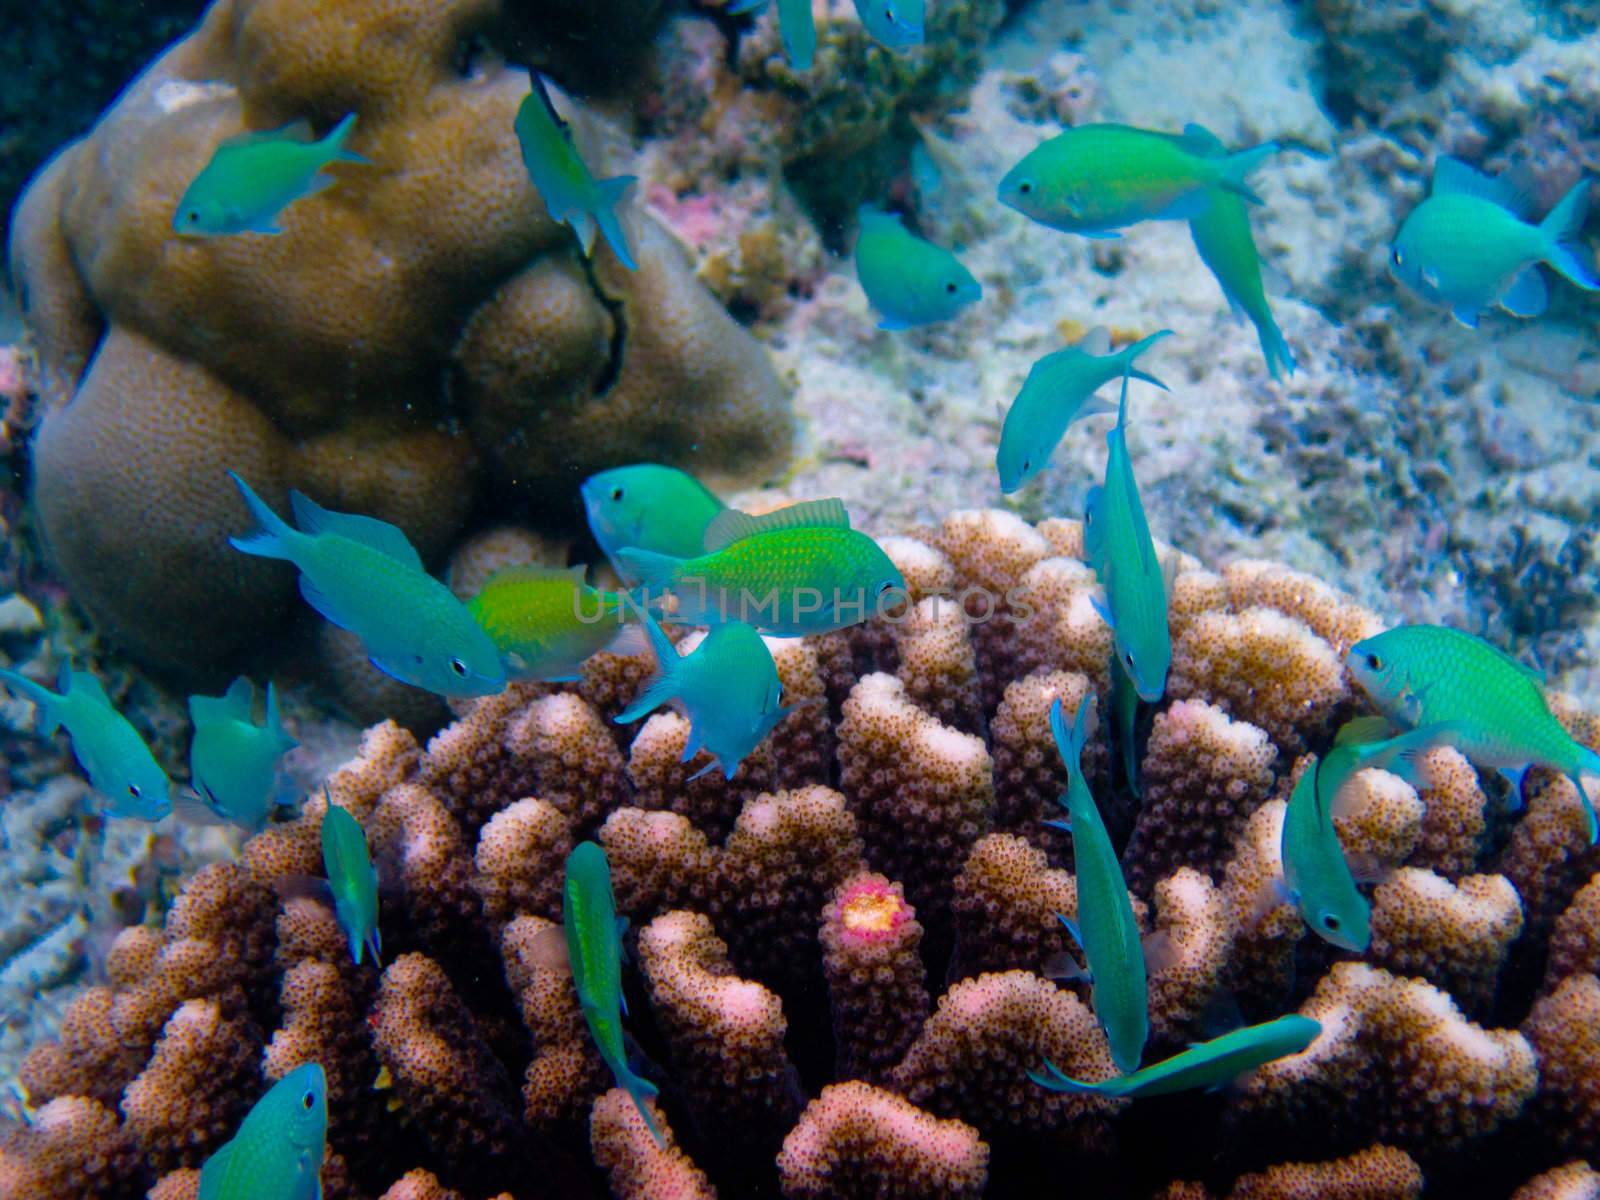 under water world at Maldives blue clear sea